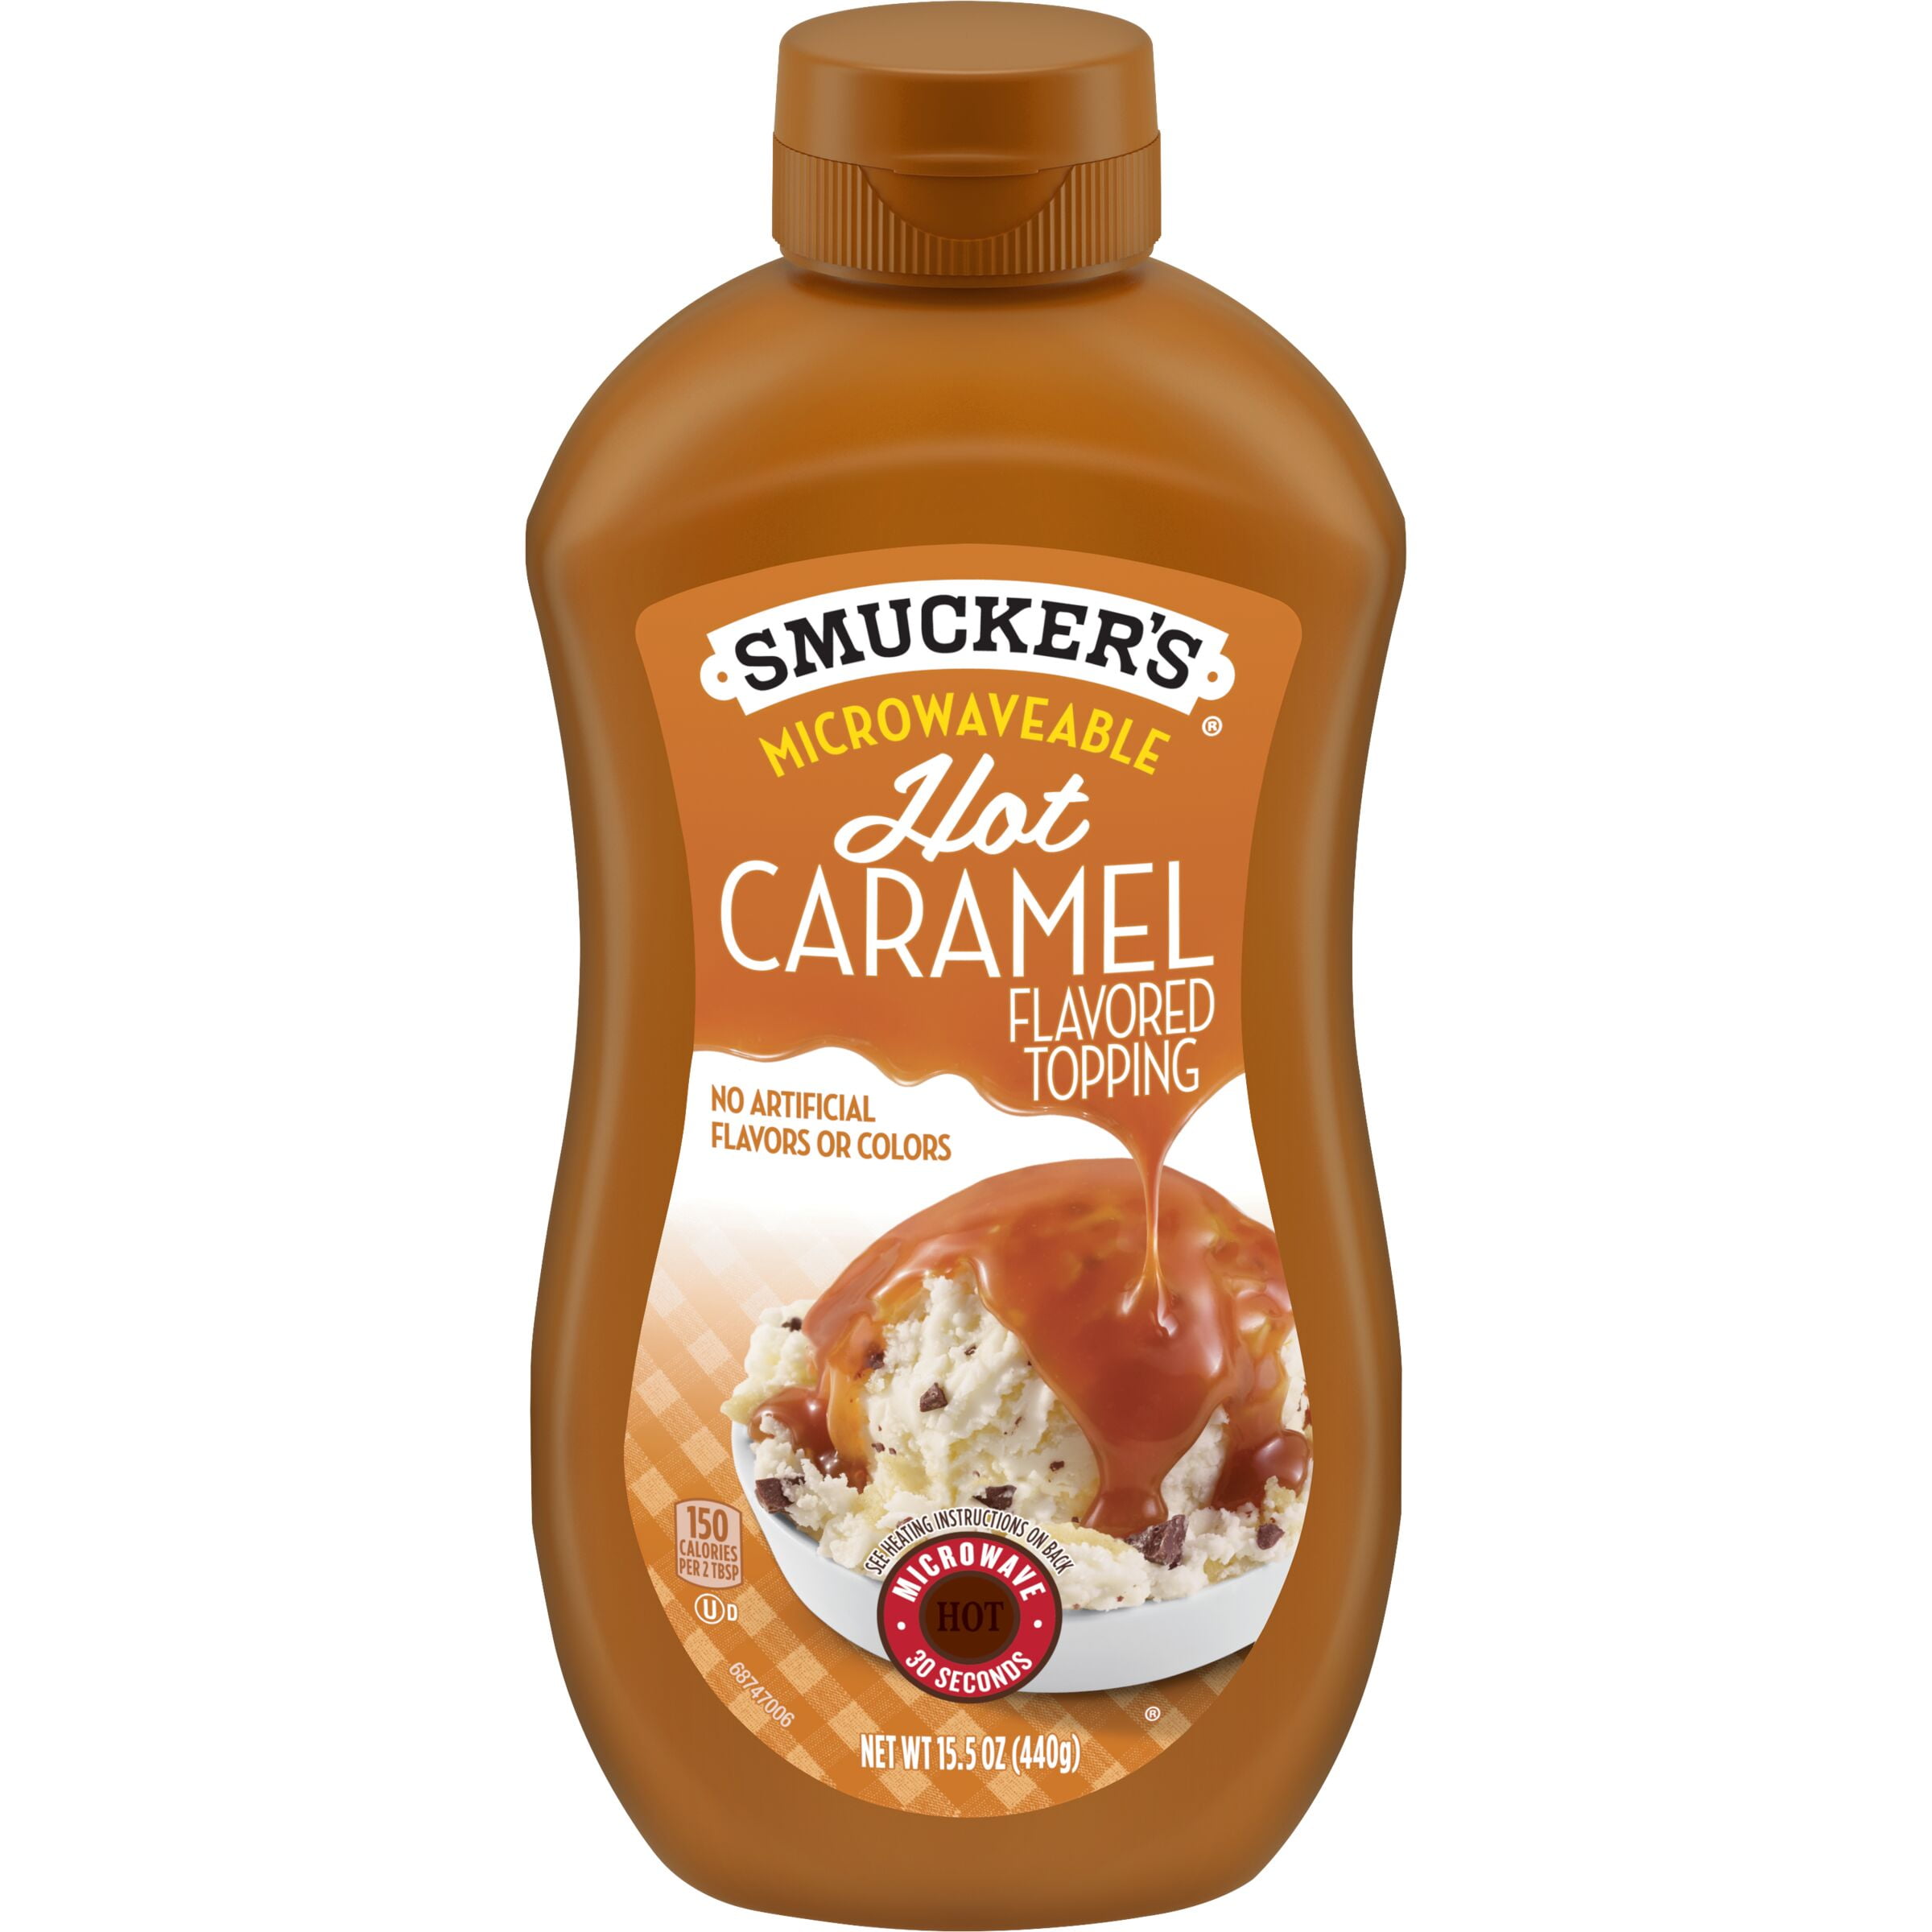 Caramel Flavor Hits Consumers' Sweet Spot